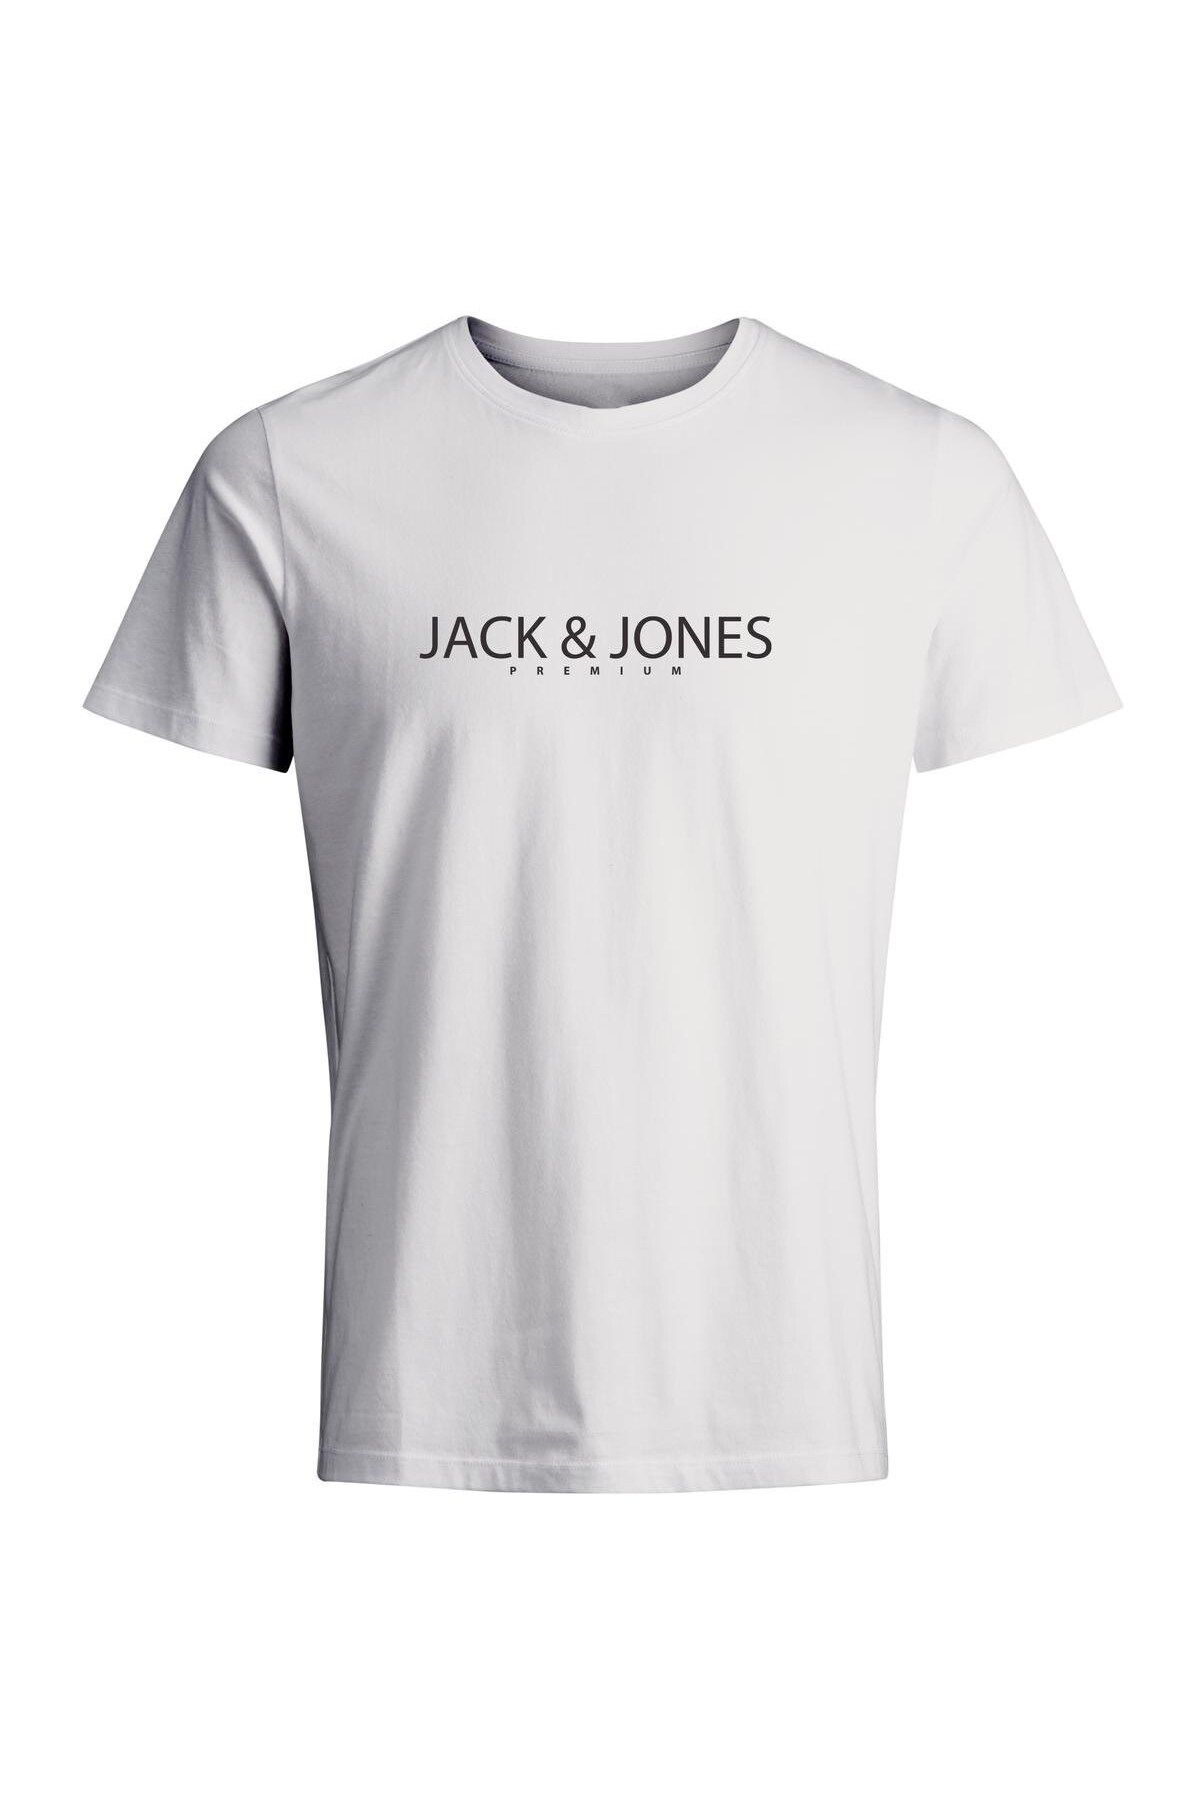 Jack & Jones Jprblajack Ss Tee Crew Neck Fst Ln Erkek T-shirt 12256971 Bright White